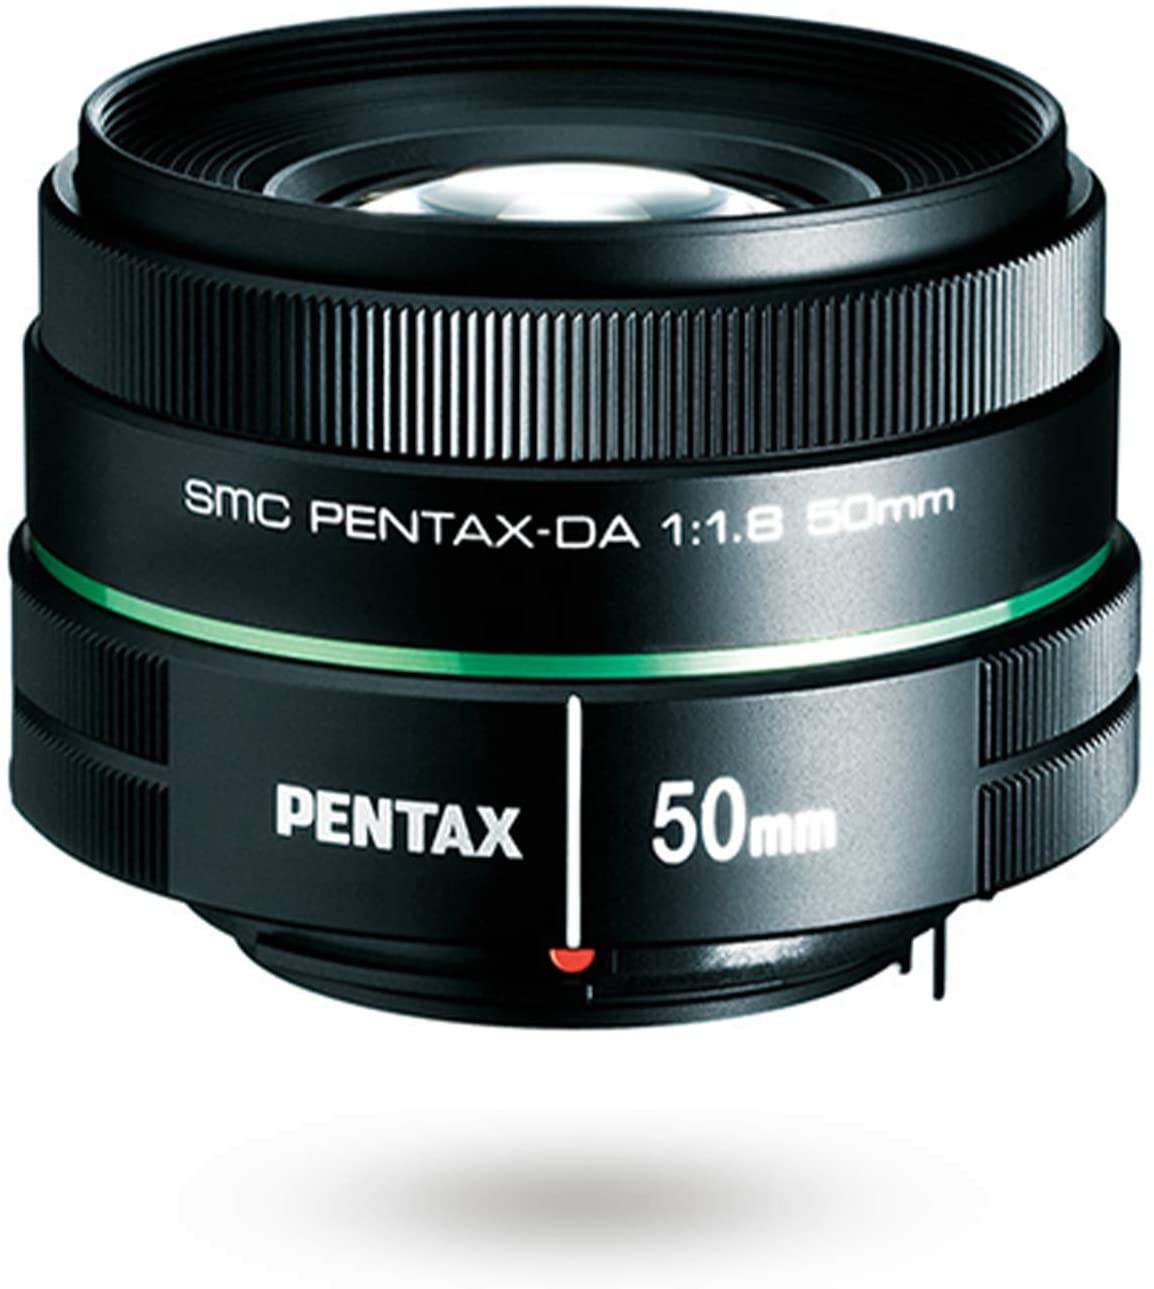 PENTAX 望遠単焦点レンズ DA50mmF1.8 Kマウント APS-Cサイズ 22177 ペンタックス - 買取サービス 全国対応